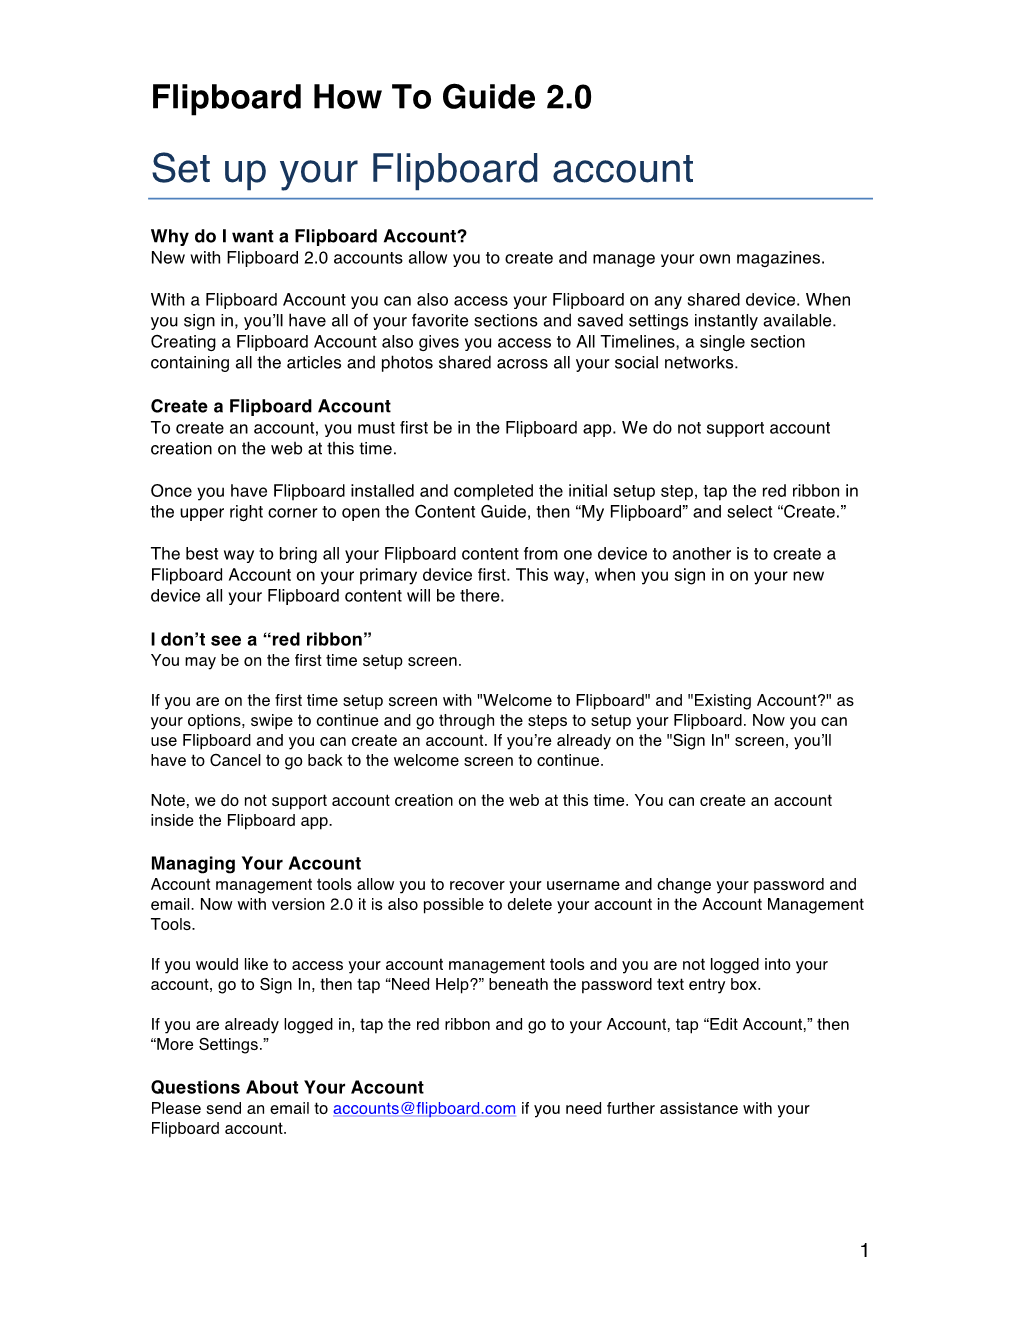 Set up Your Flipboard Account